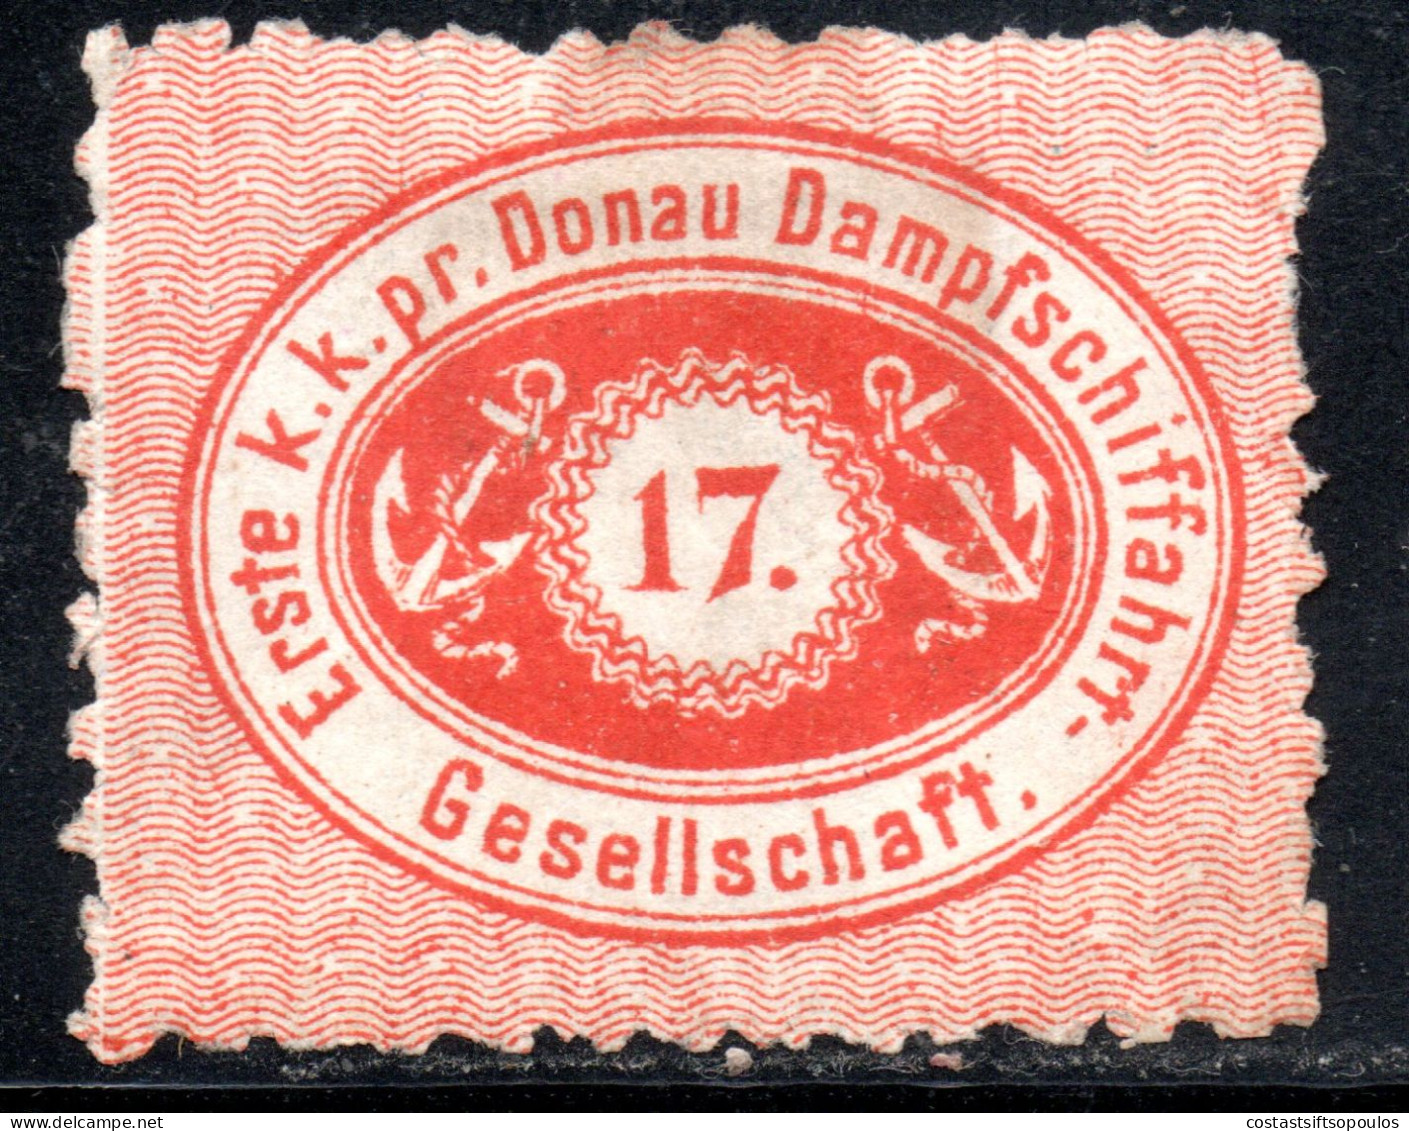 2460. AUSTRIA 1866 DDSG 17 KR. #1 SIGNED - Donau Dampfschiffahrts Gesellschaft (DDSG)